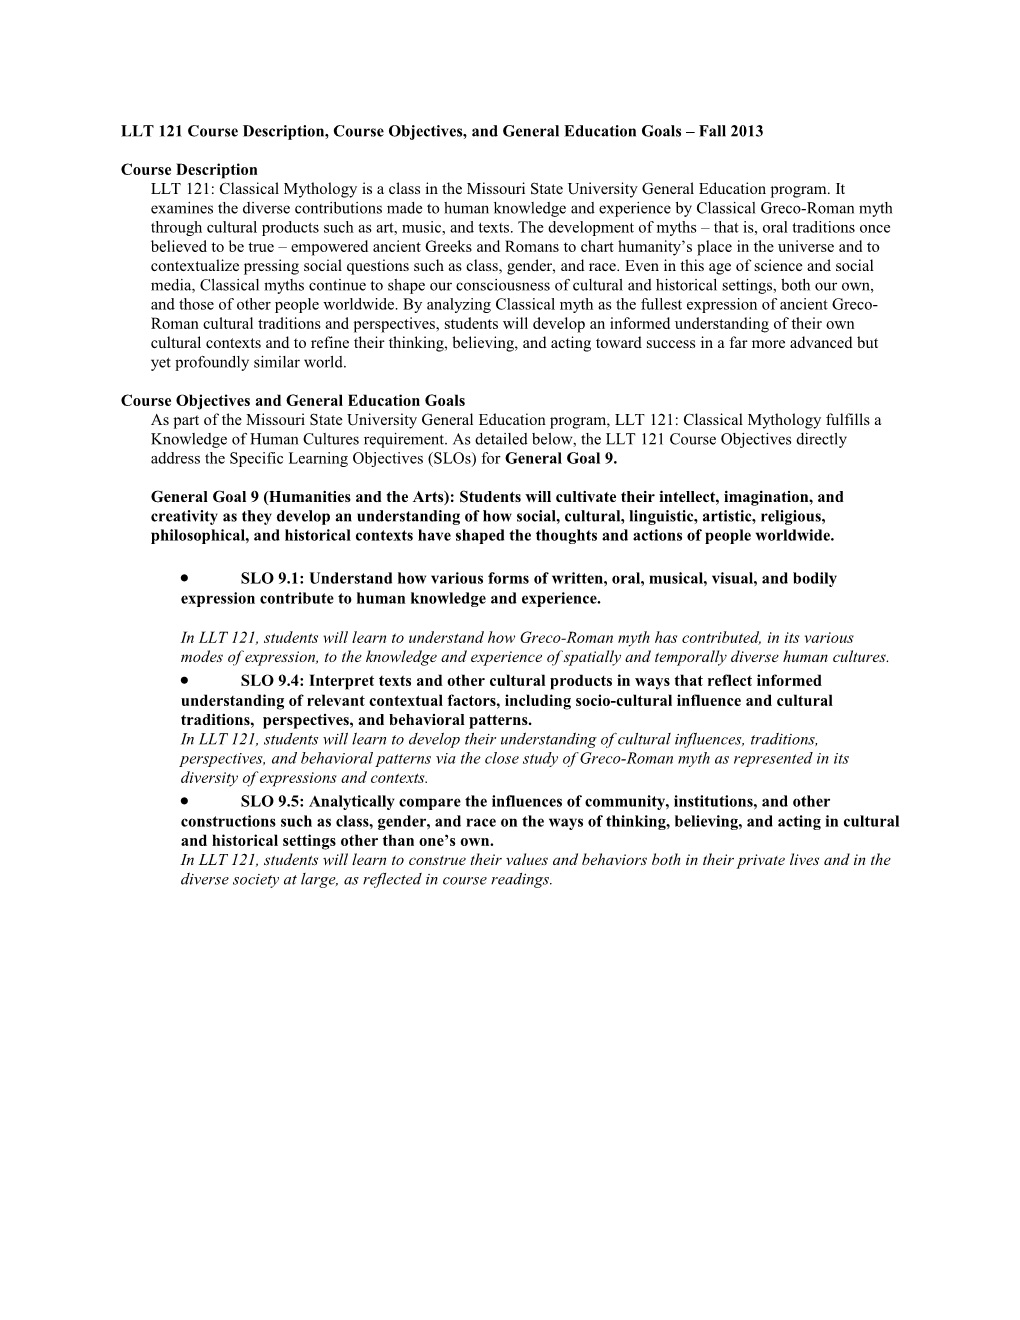 LLT 121 Course Description, Course Objectives, and General Education Goals Fall 2013